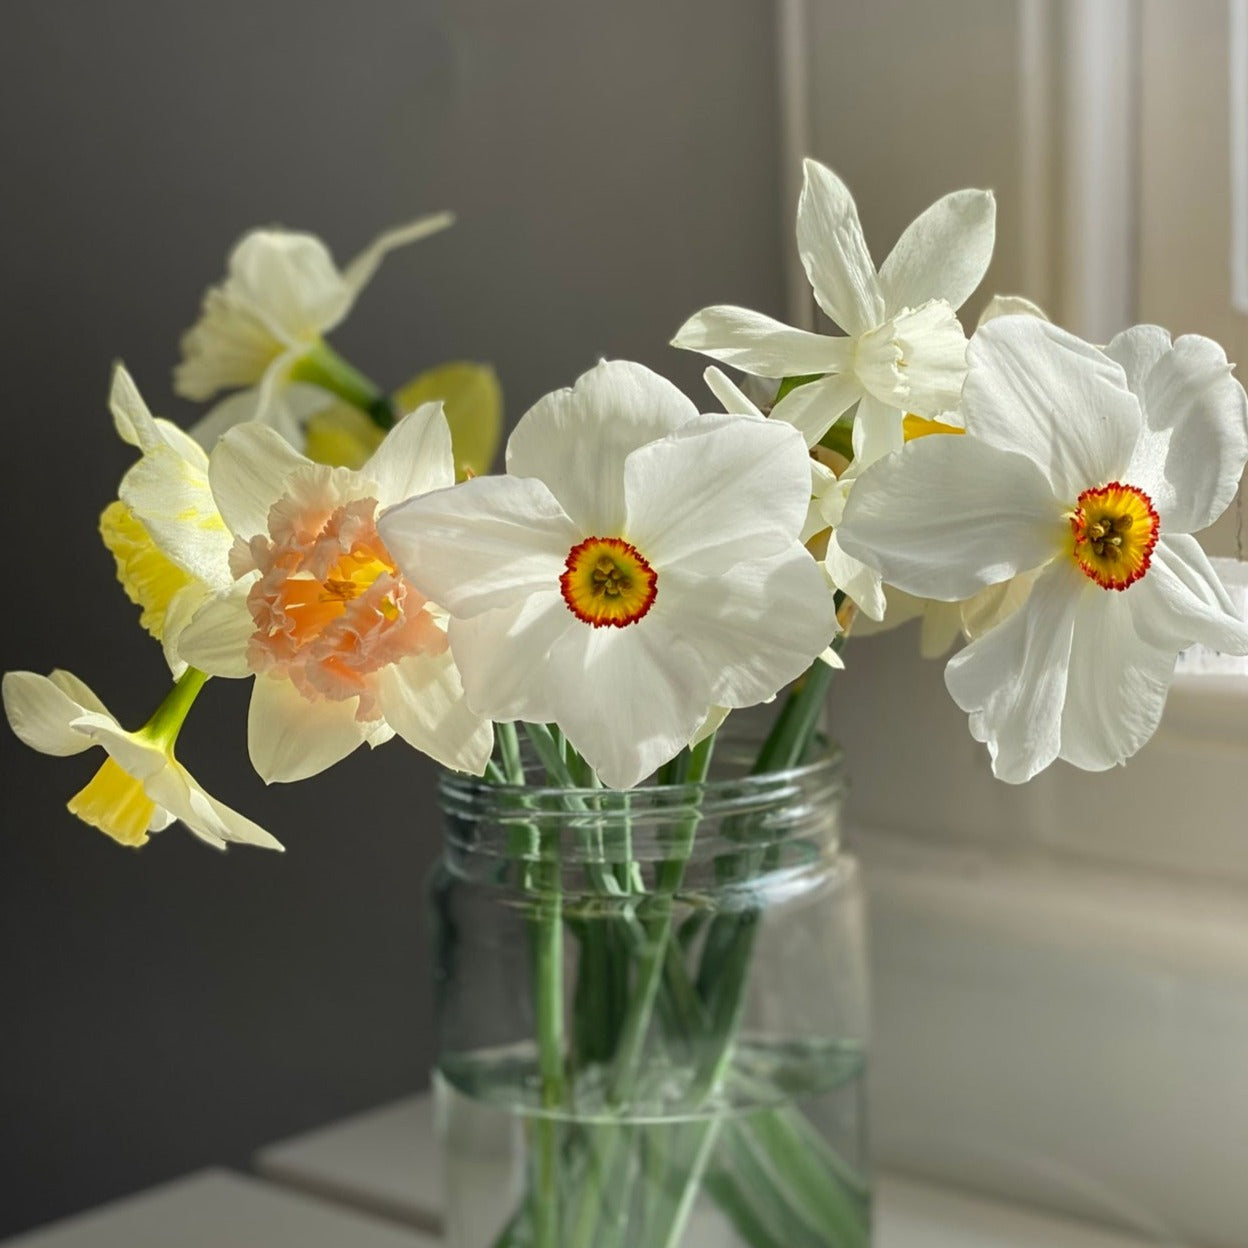 10th Anniversary Gift - Daffodil Flower Stud Earrings - Silver